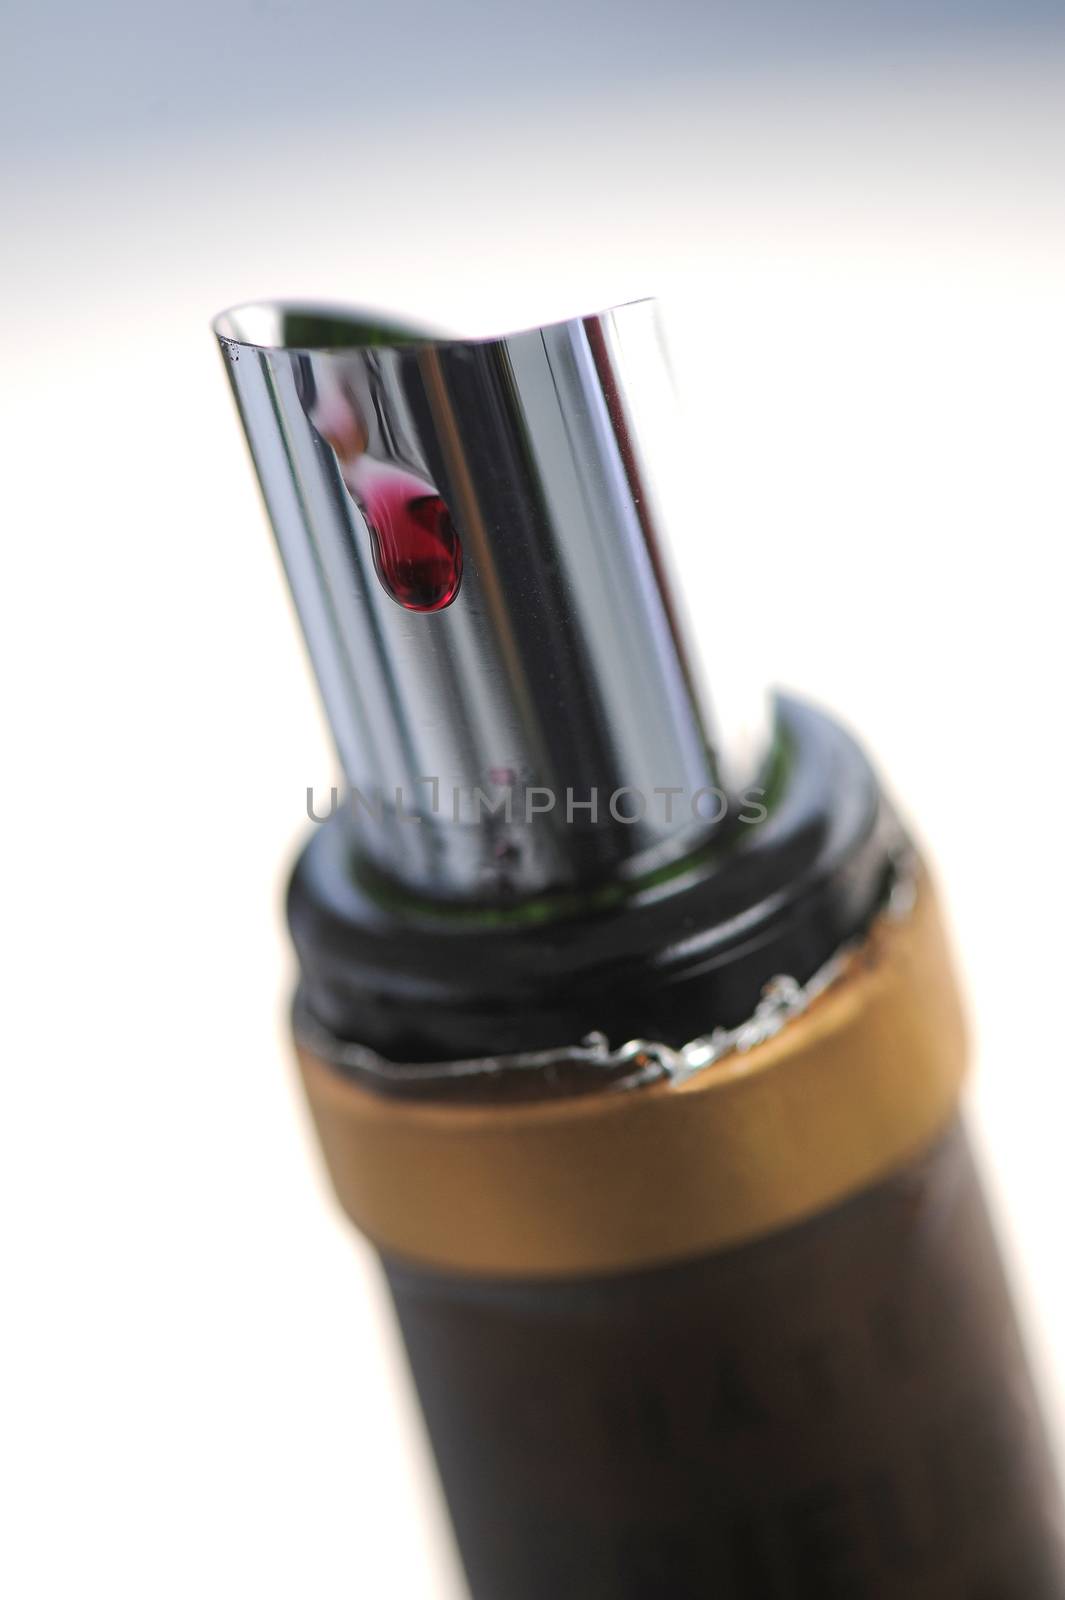 Drop stop - Tasting wine in a vinery